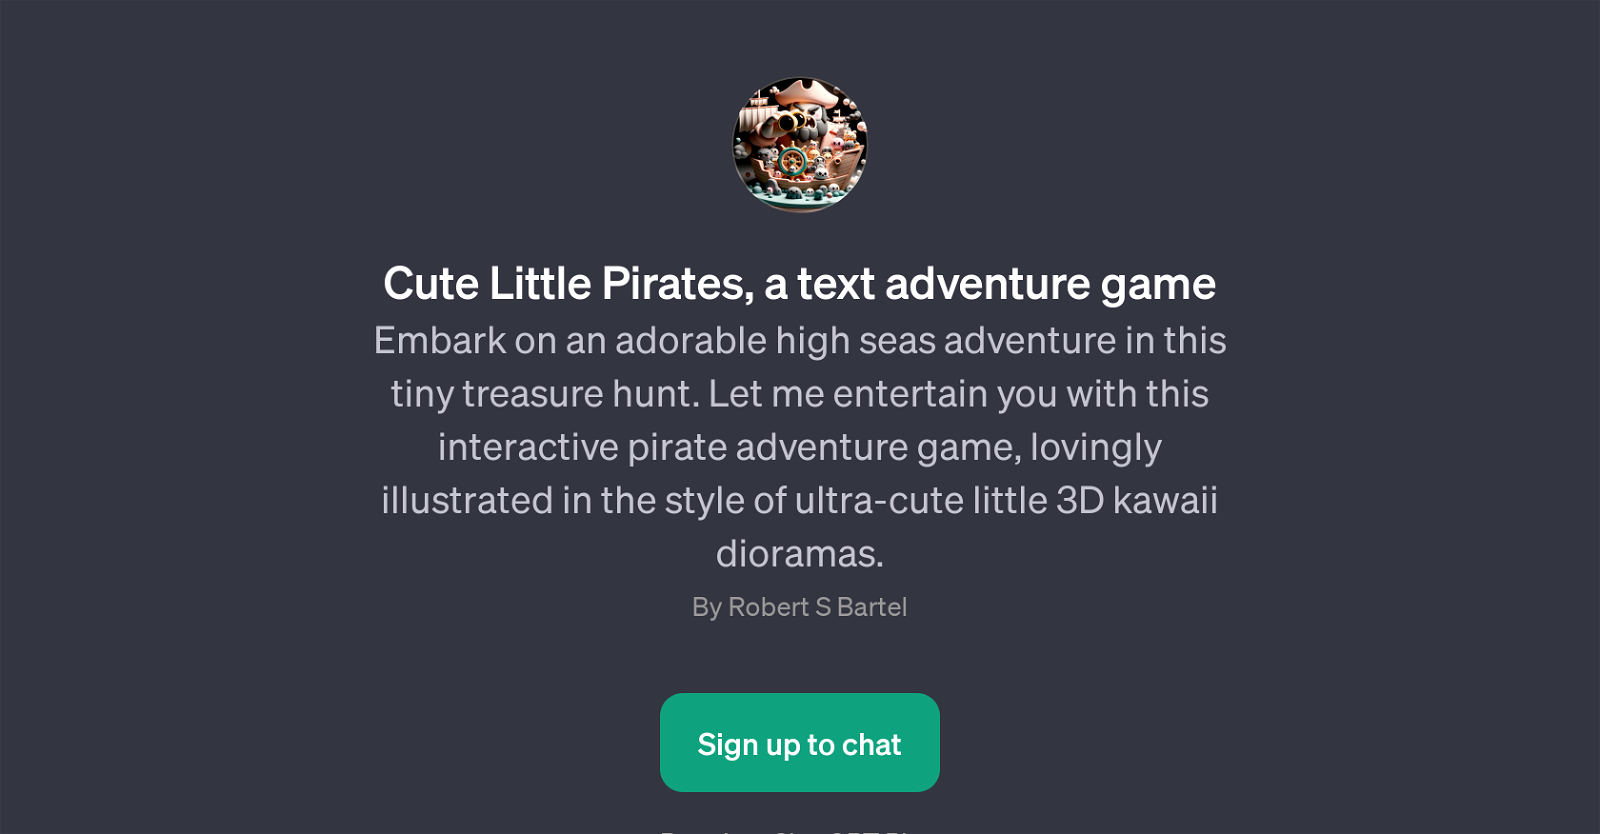 Cute Little Pirates website